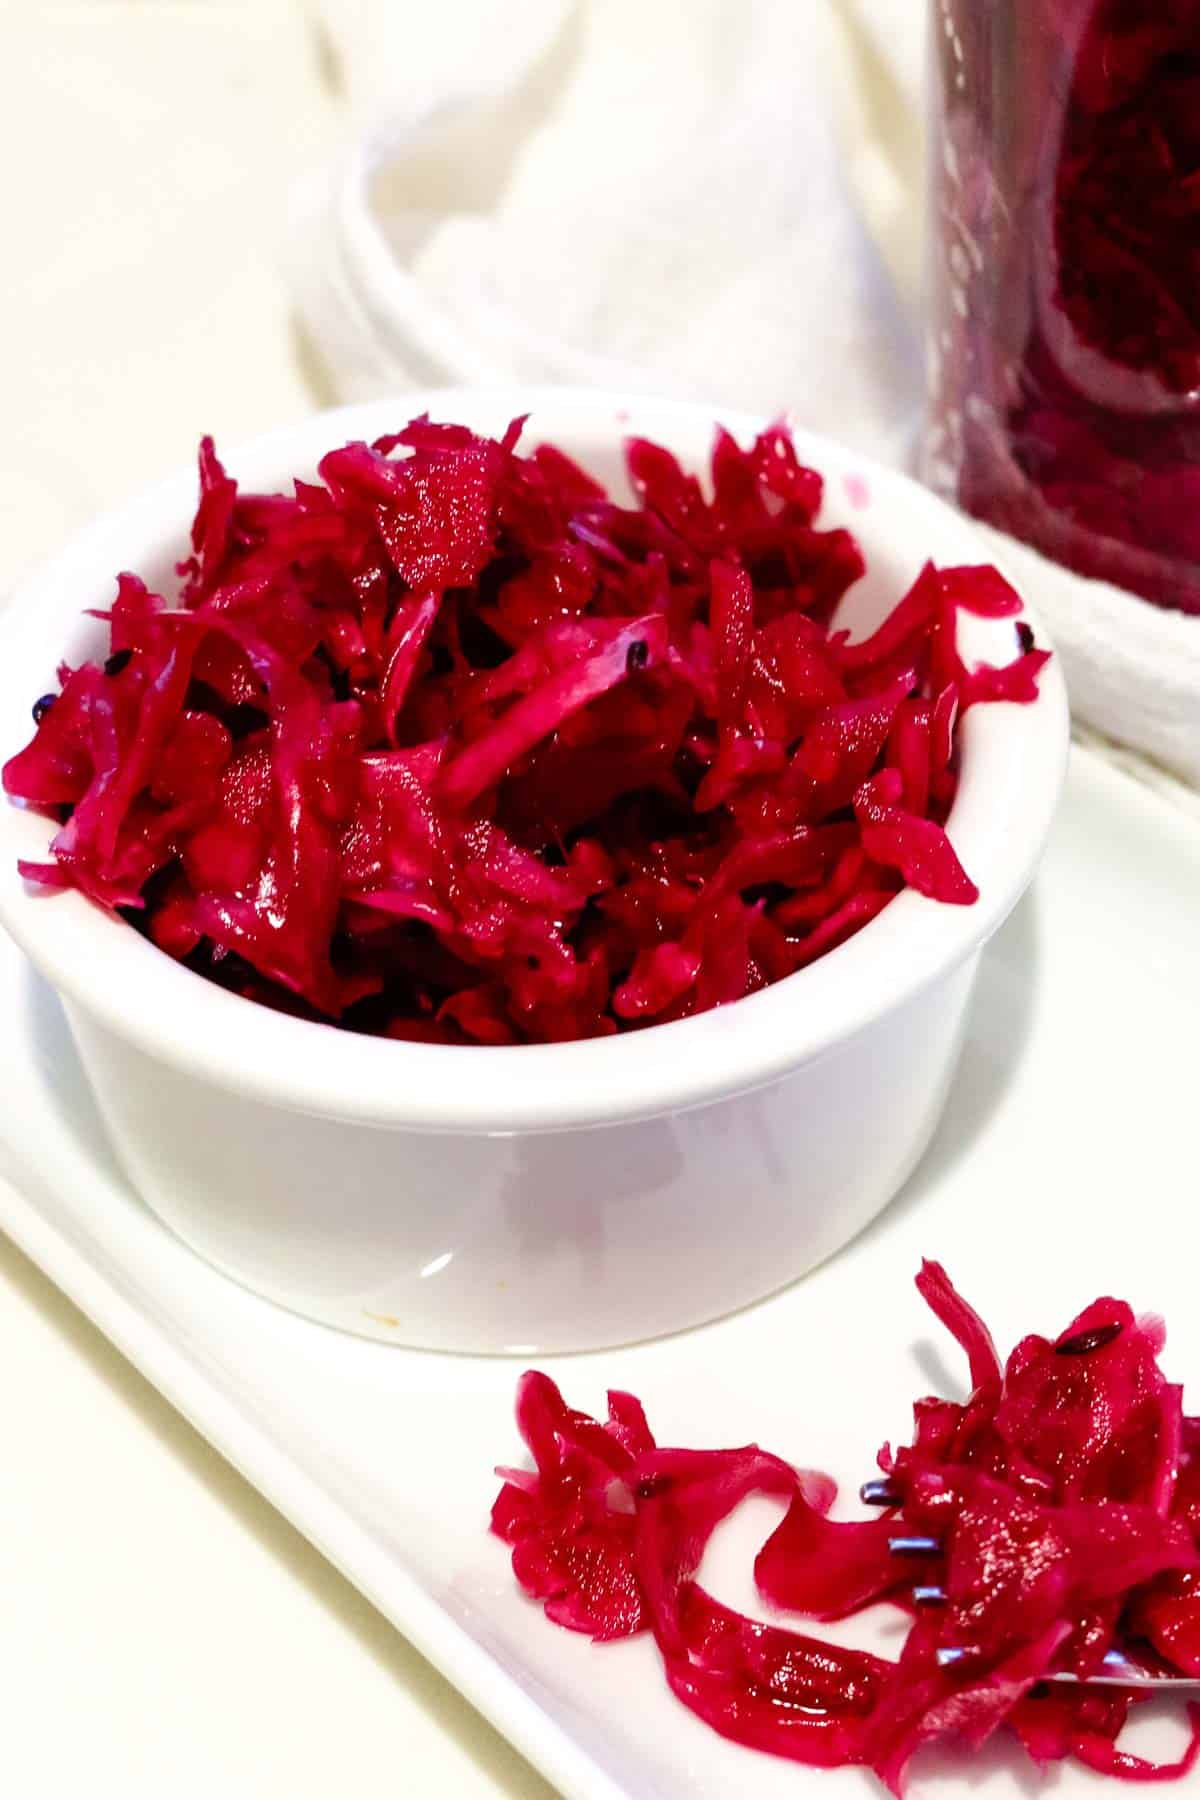 fermented red cabbage in a small ramekin.